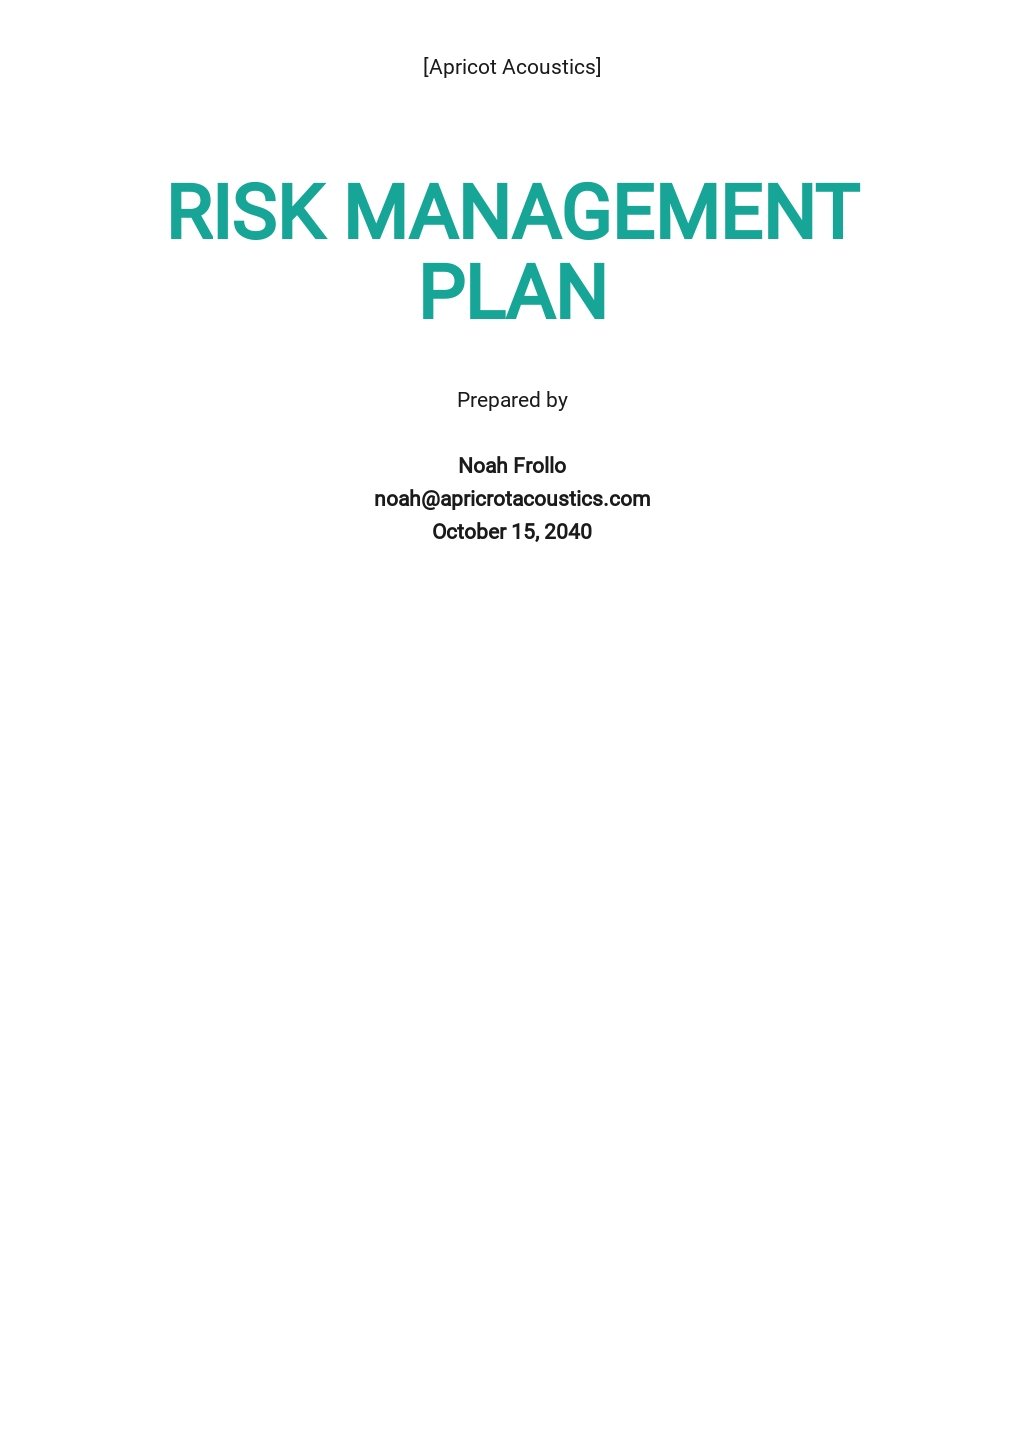 Sample Risk Management Plan Template.jpe